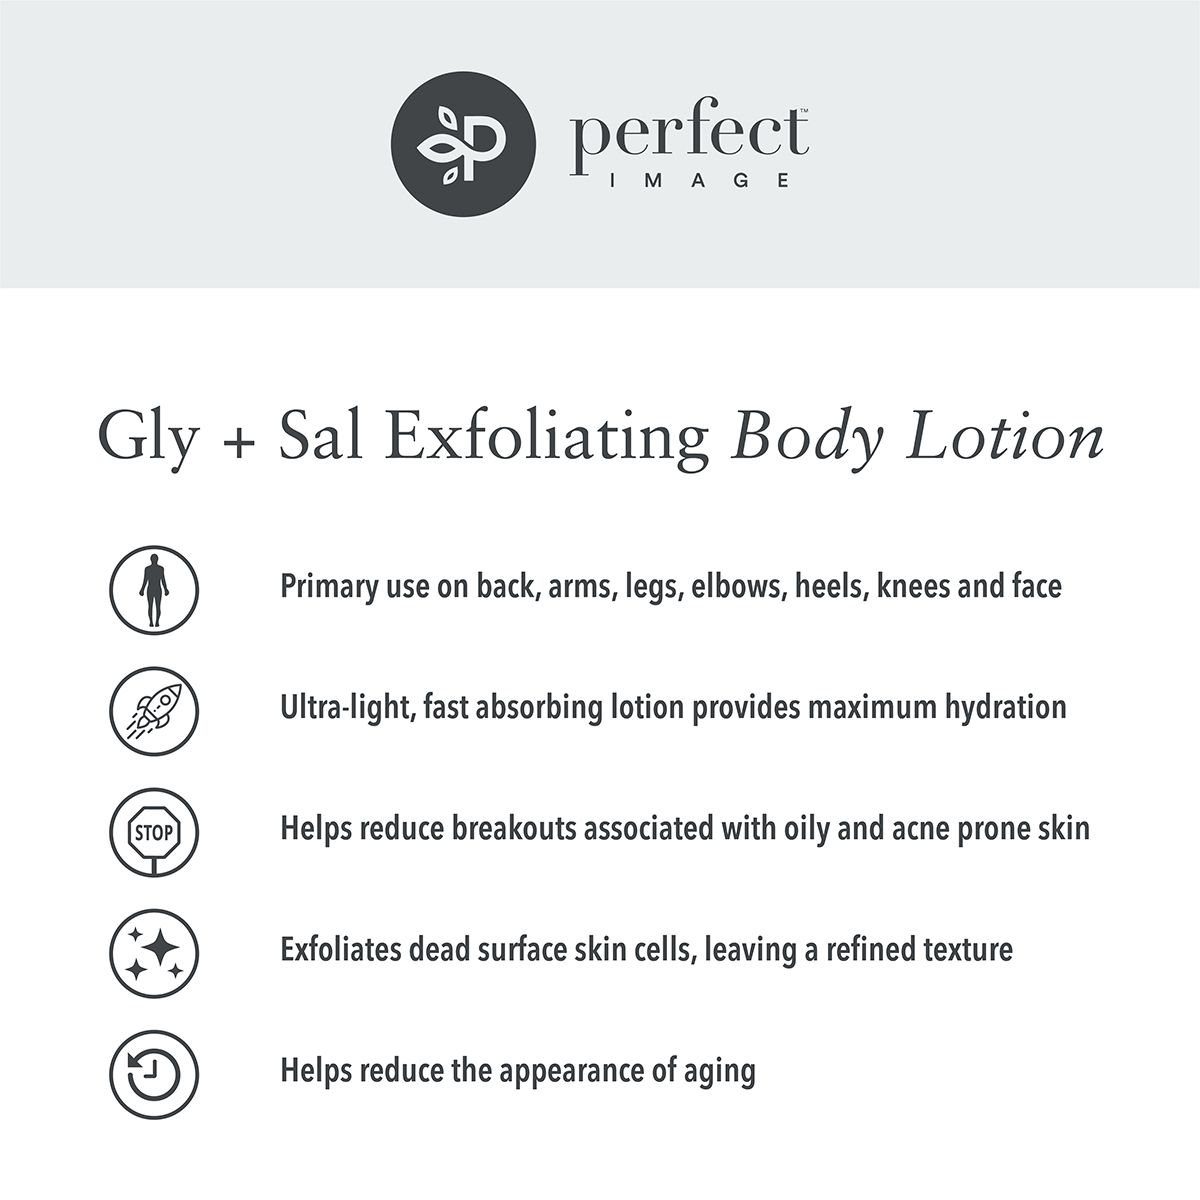 Gly + Sal Exfoliating Body Lotion